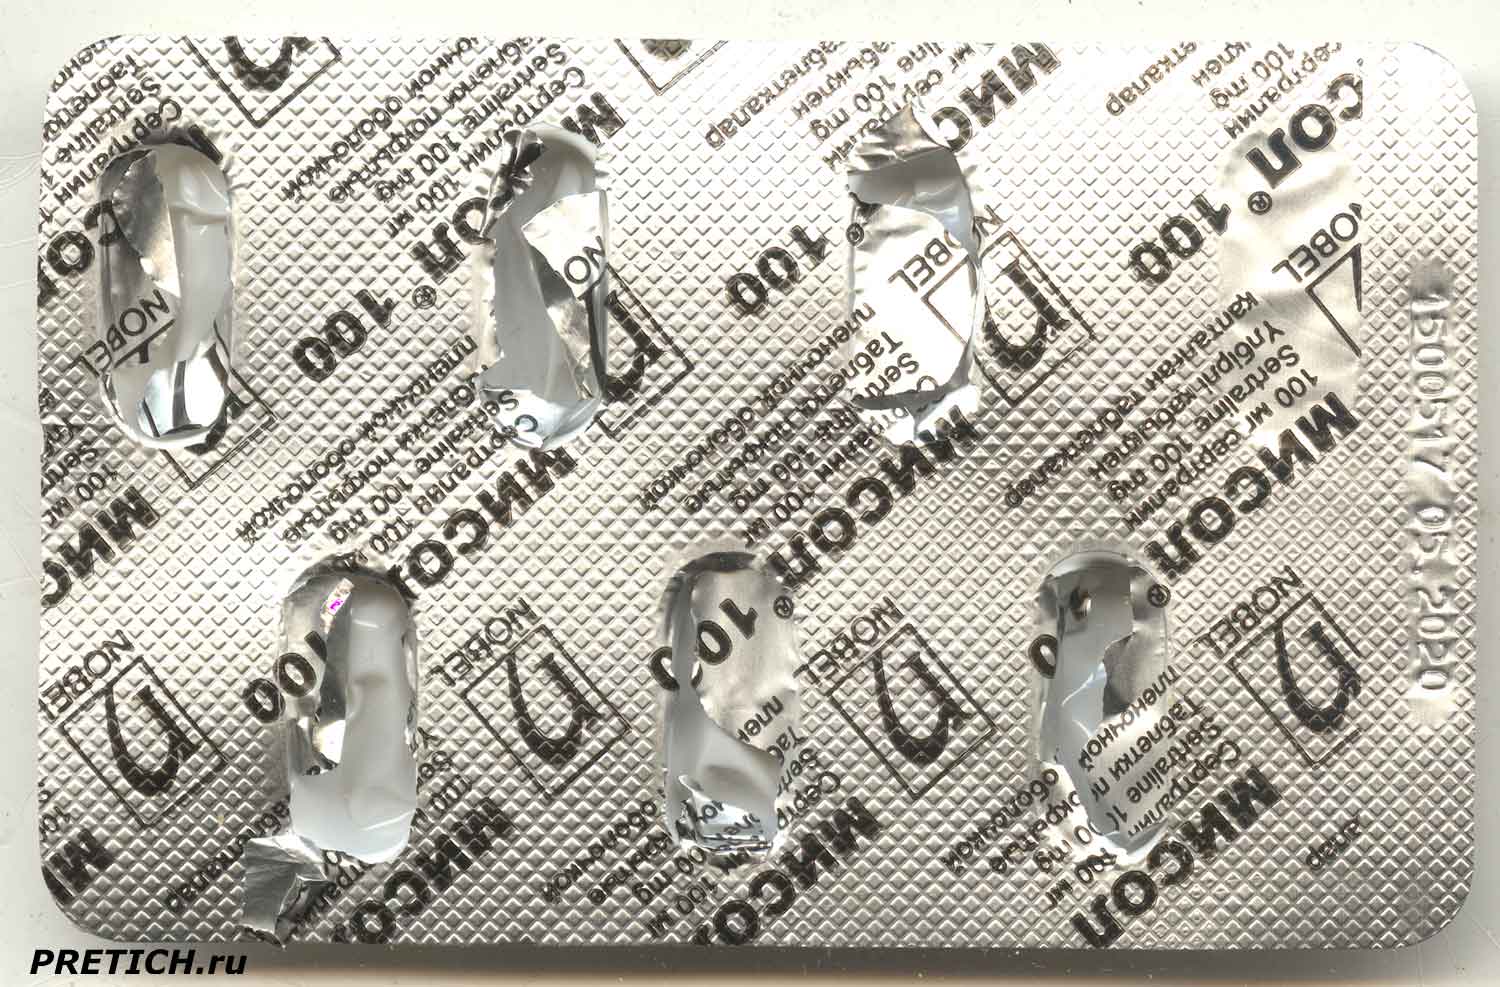 misol-100-antidepress-1000-hgfvgf-0003.jpg